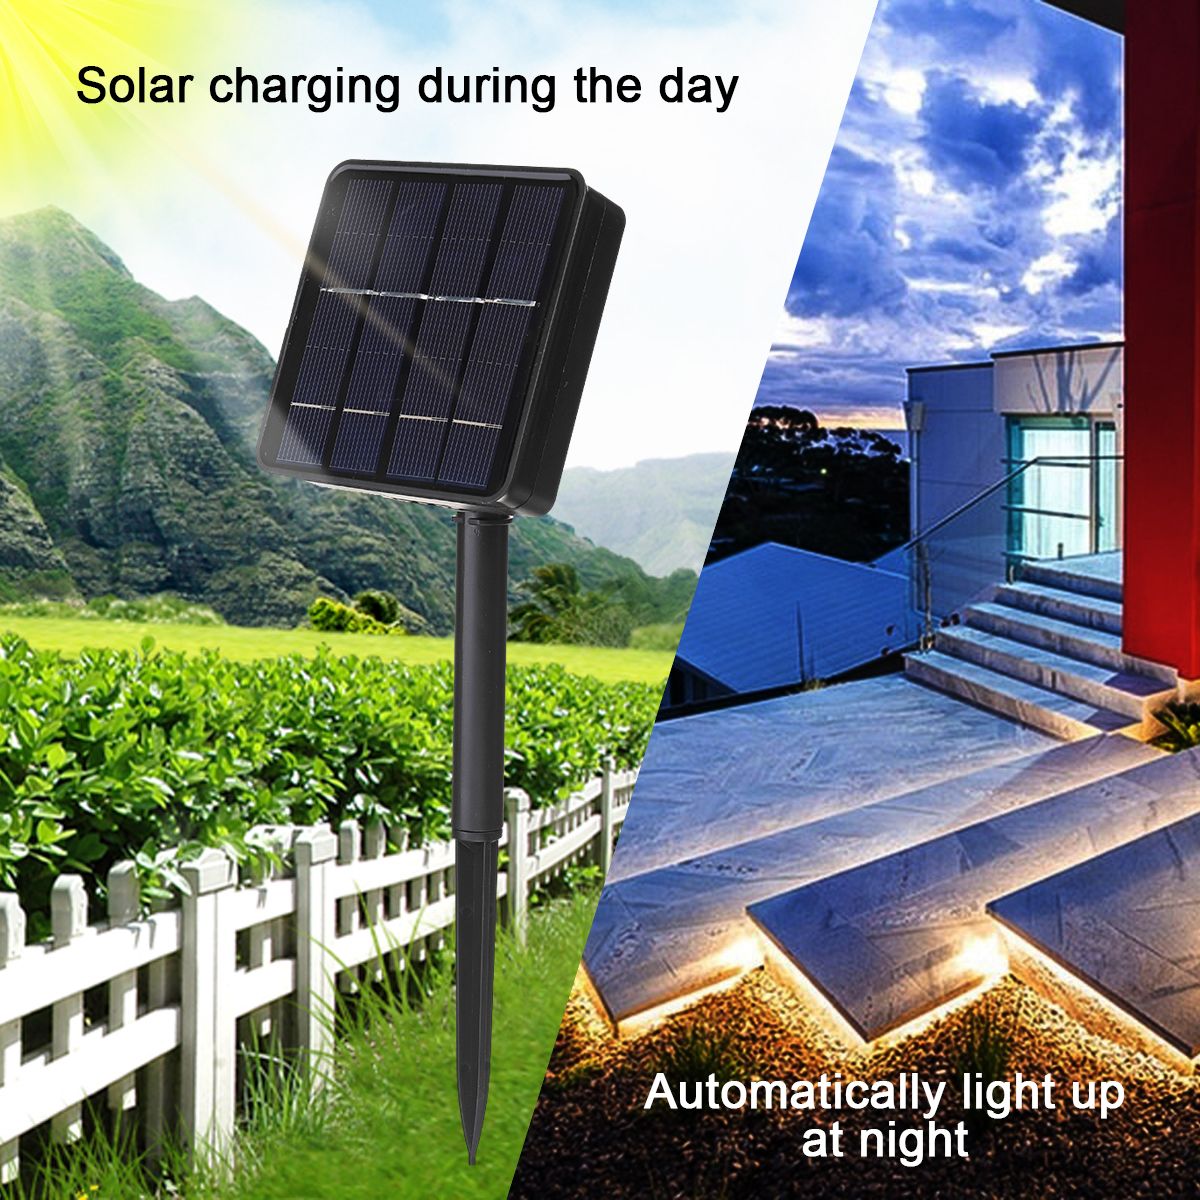 Solar-Power-RGB-Light-Strip-2835-LED-IP65-Waterproof-Outdoor-Garden-Home-Decor-1738000